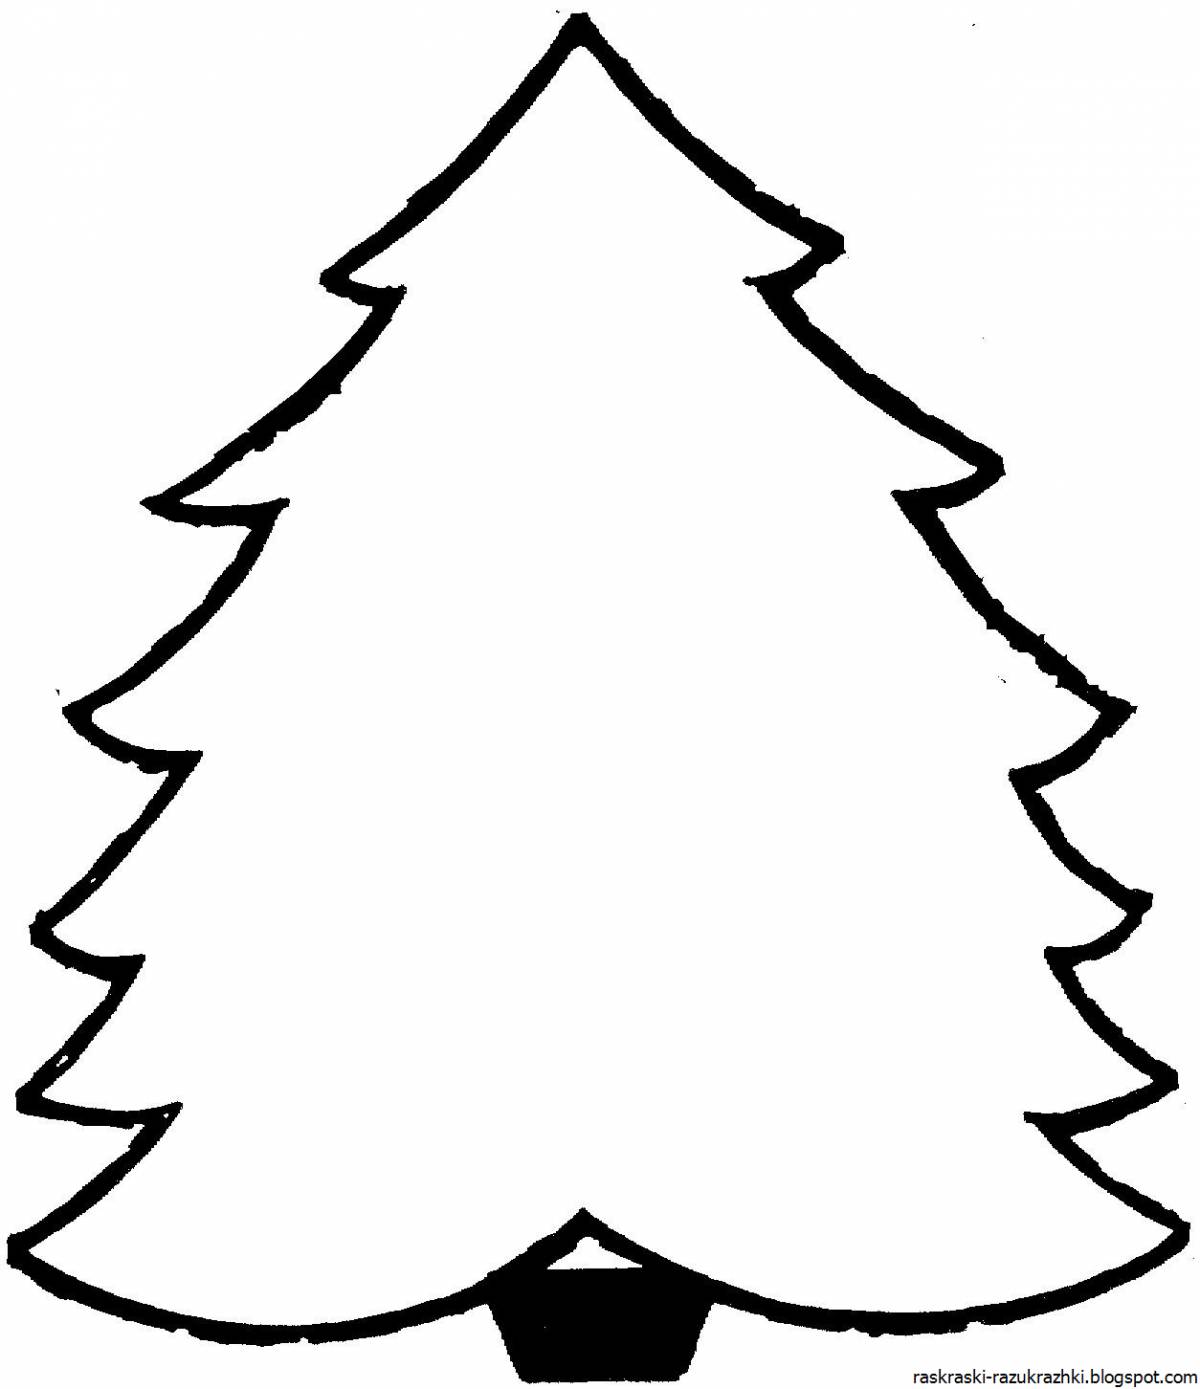 Royal Christmas tree coloring page